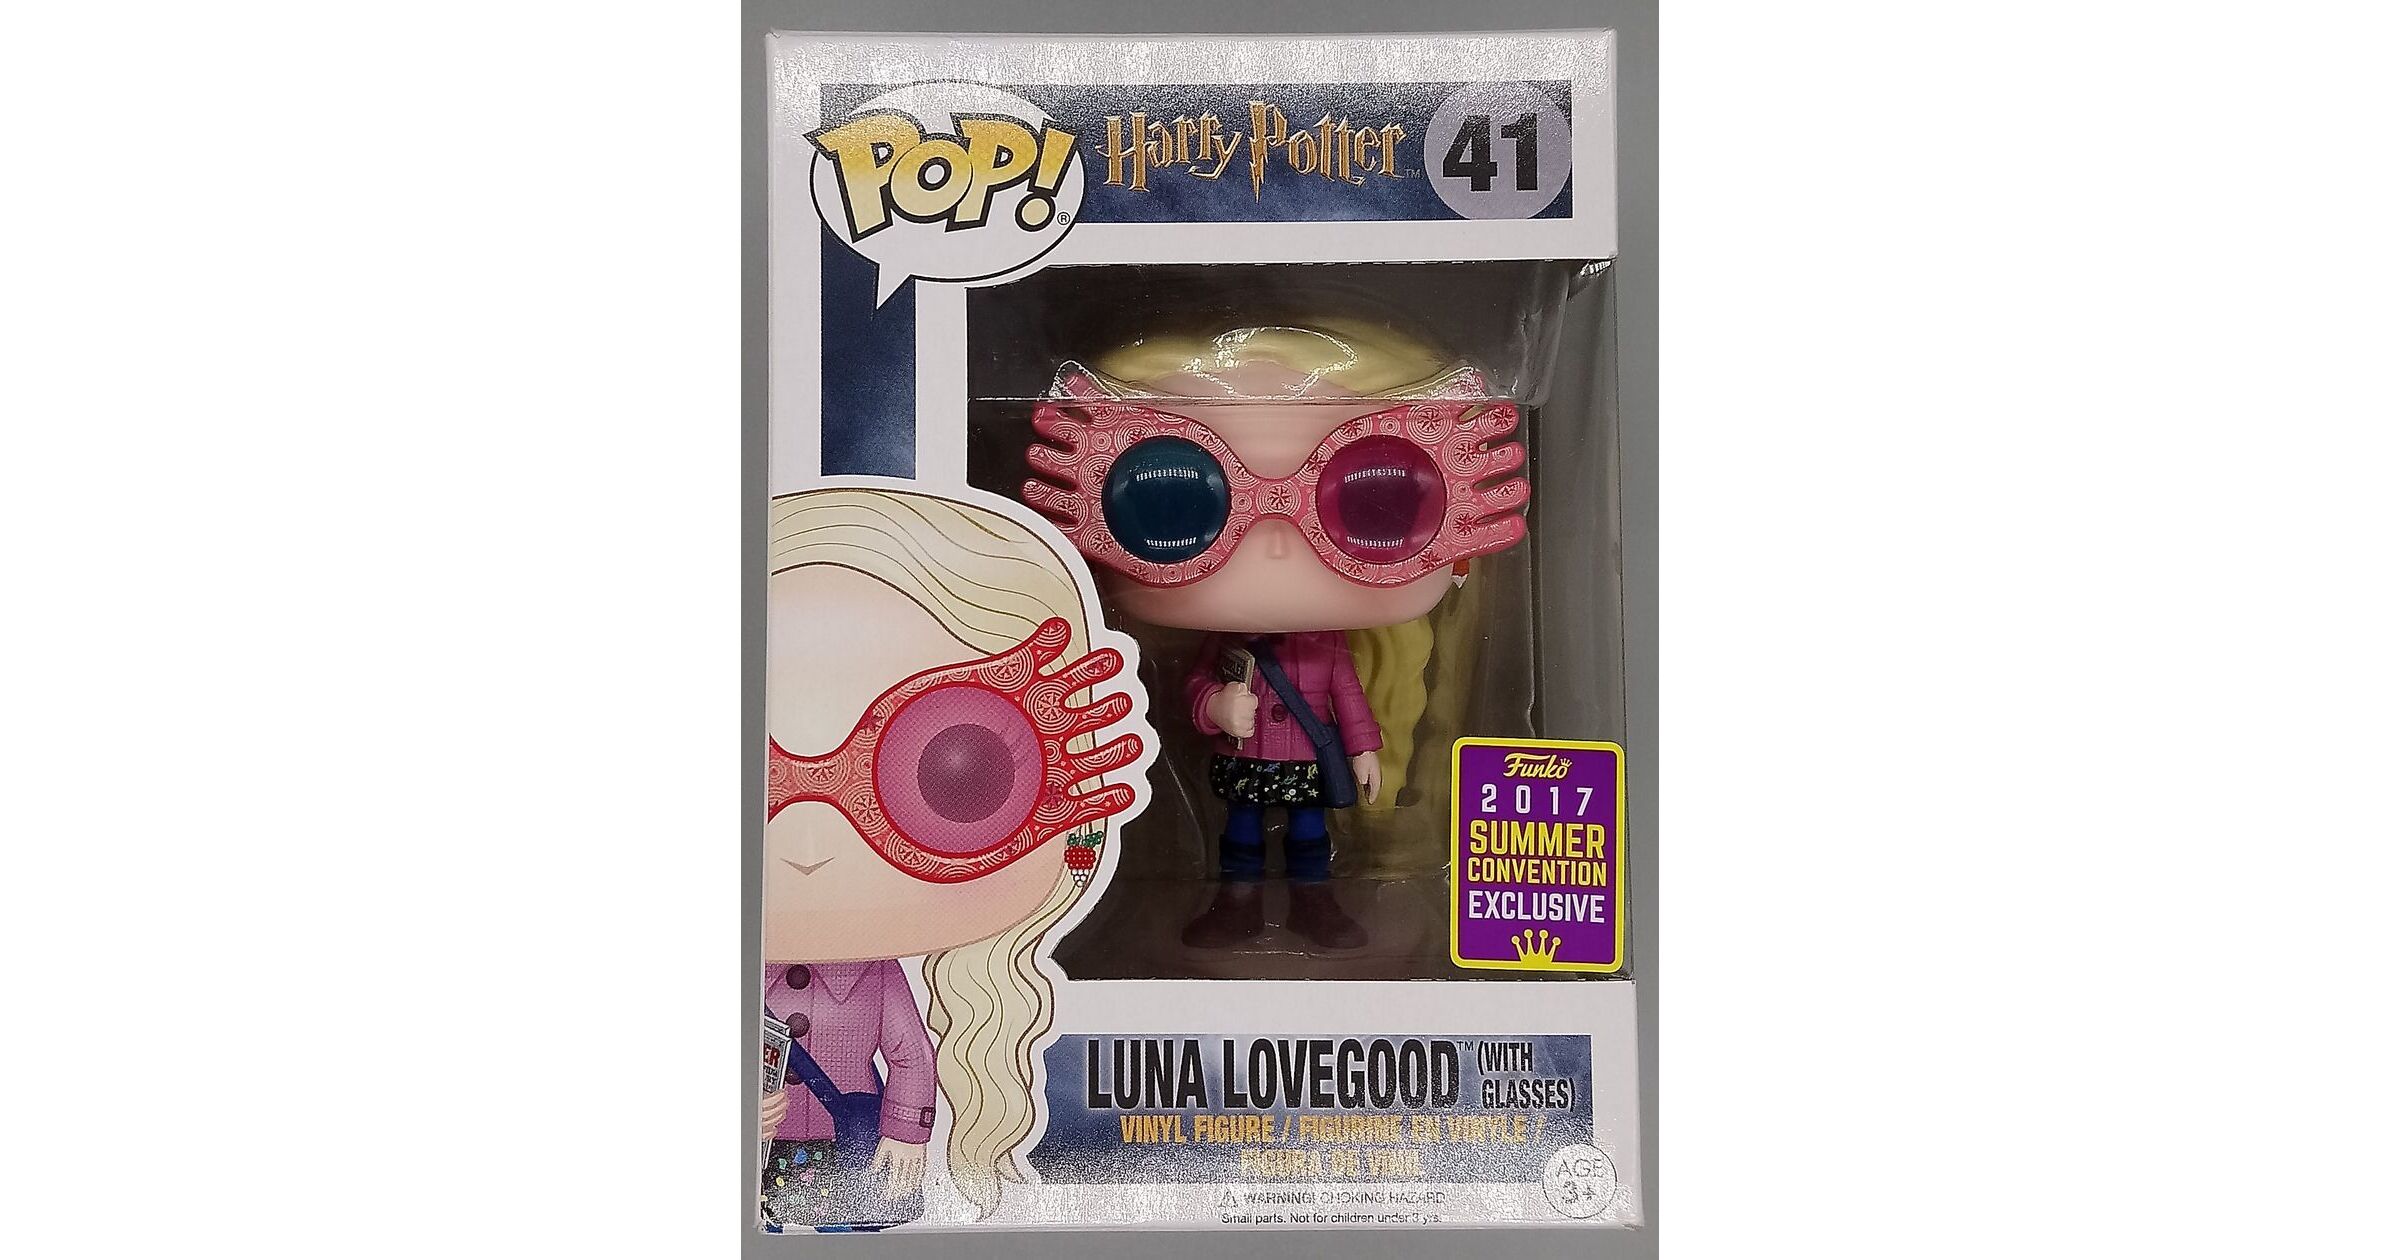 Funko POP! Harry Potter Luna Lovegood with Glasses #41 Vinyl Figure